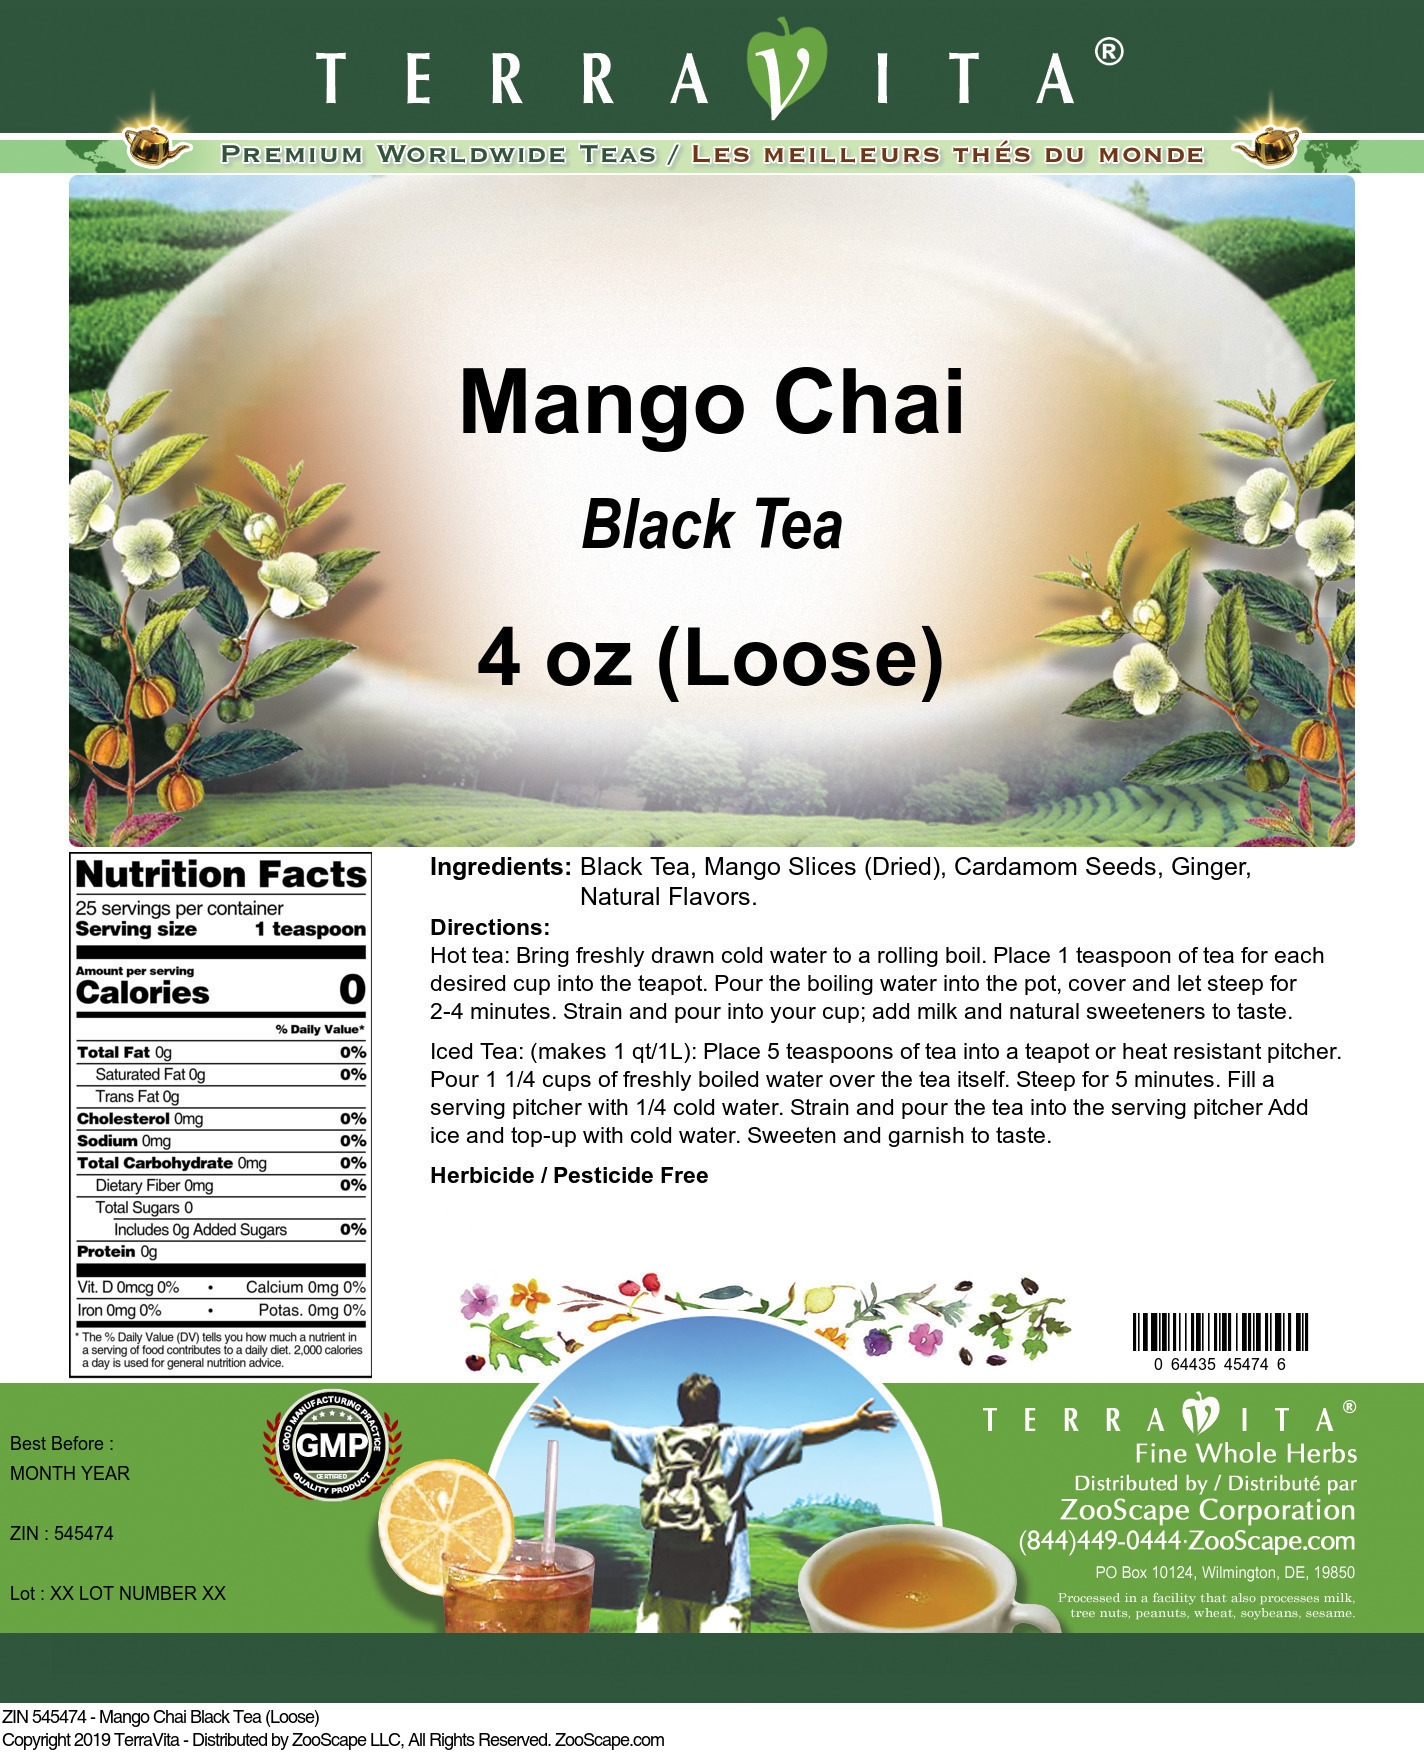 Mango Chai Black Tea (Loose) - Label